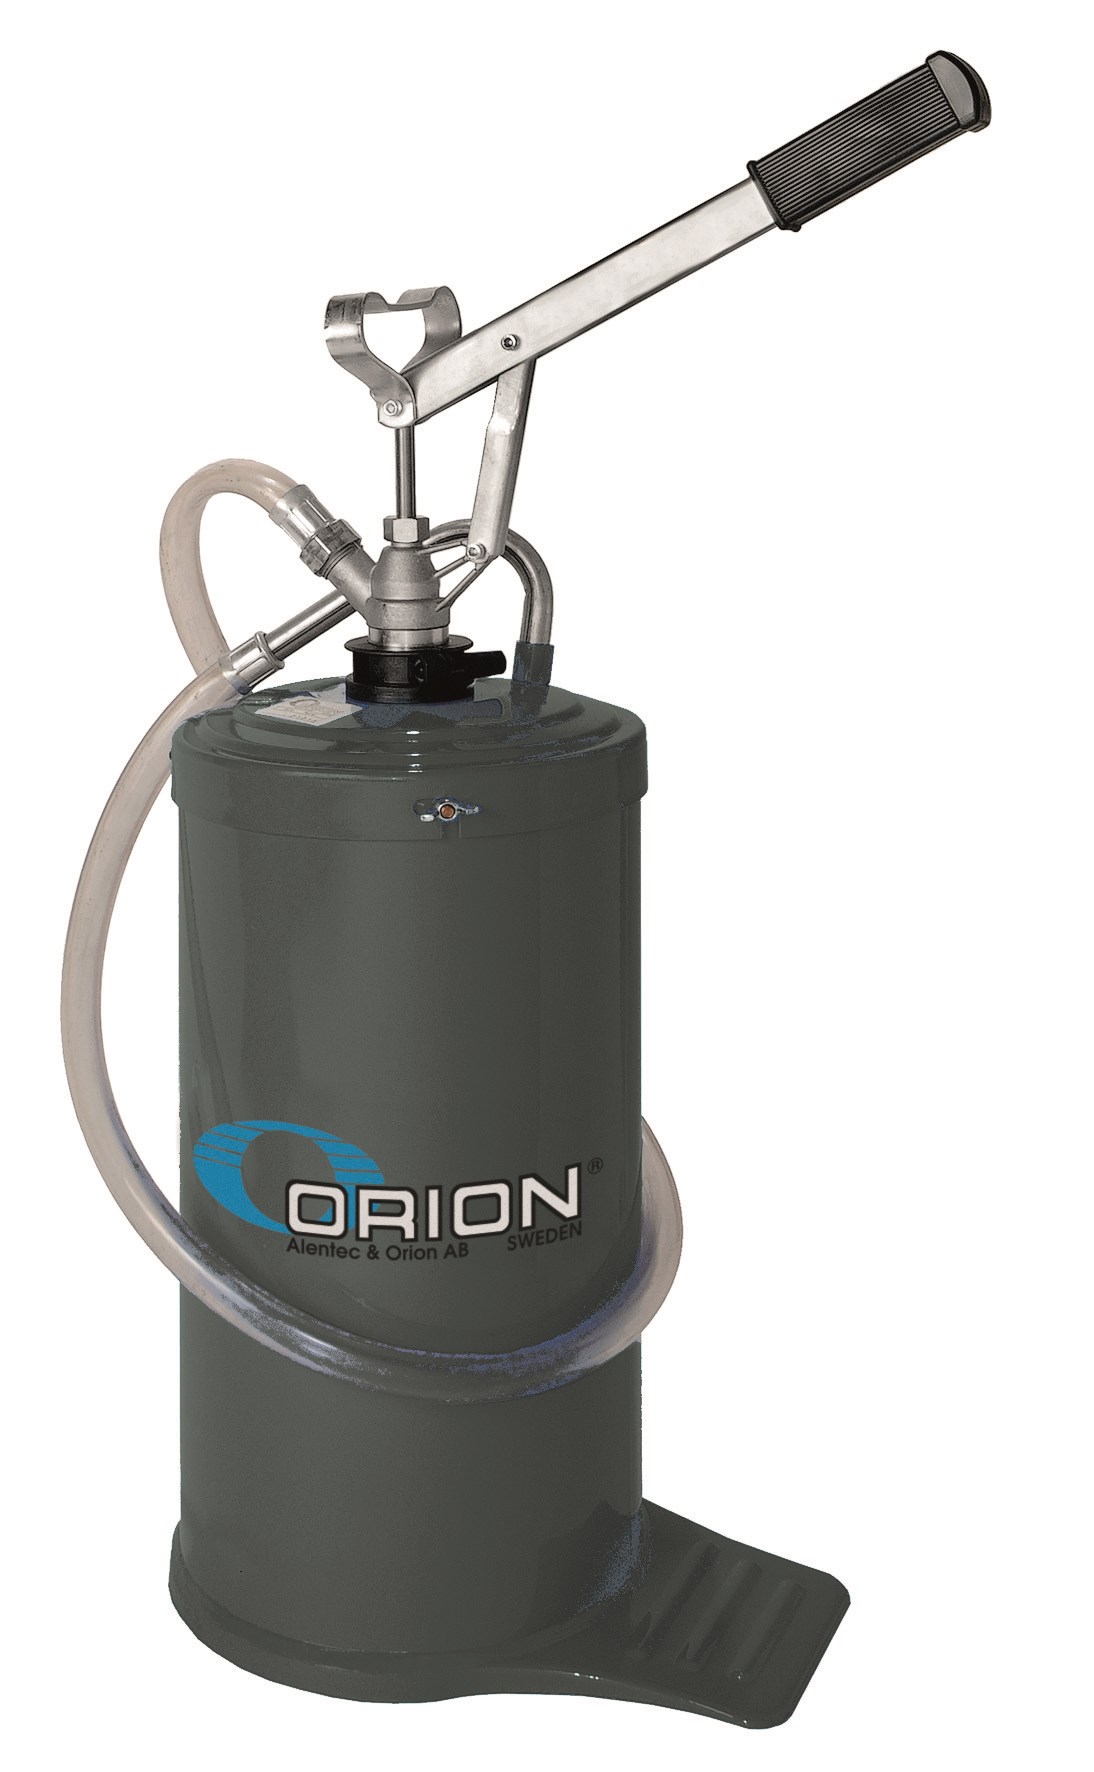 Elektrische Ölpumpe 12V tragbar - Alentec & Orion AB